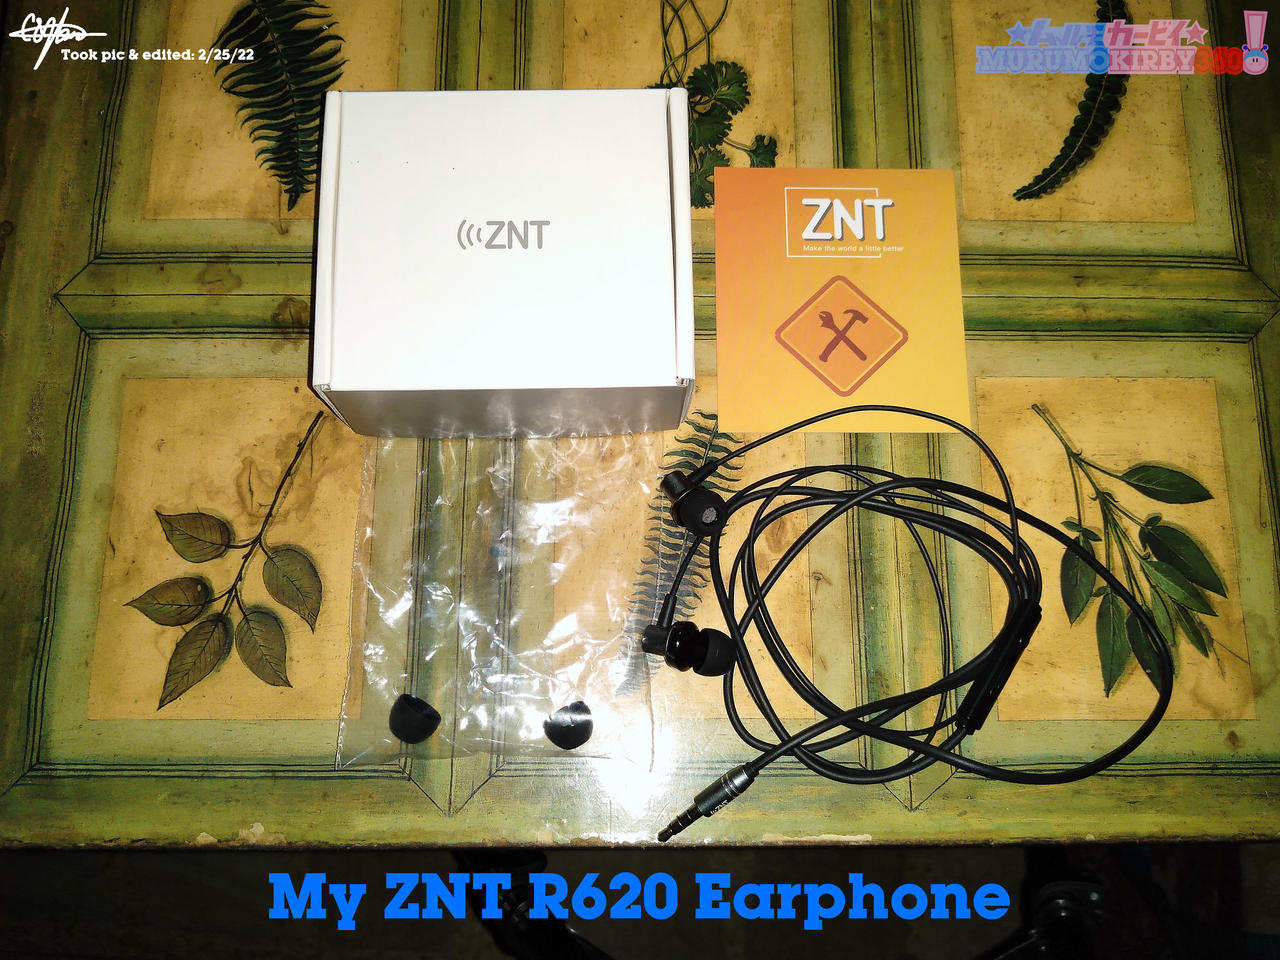 My ZNT R620 earphone by murumokirby360 on DeviantArt